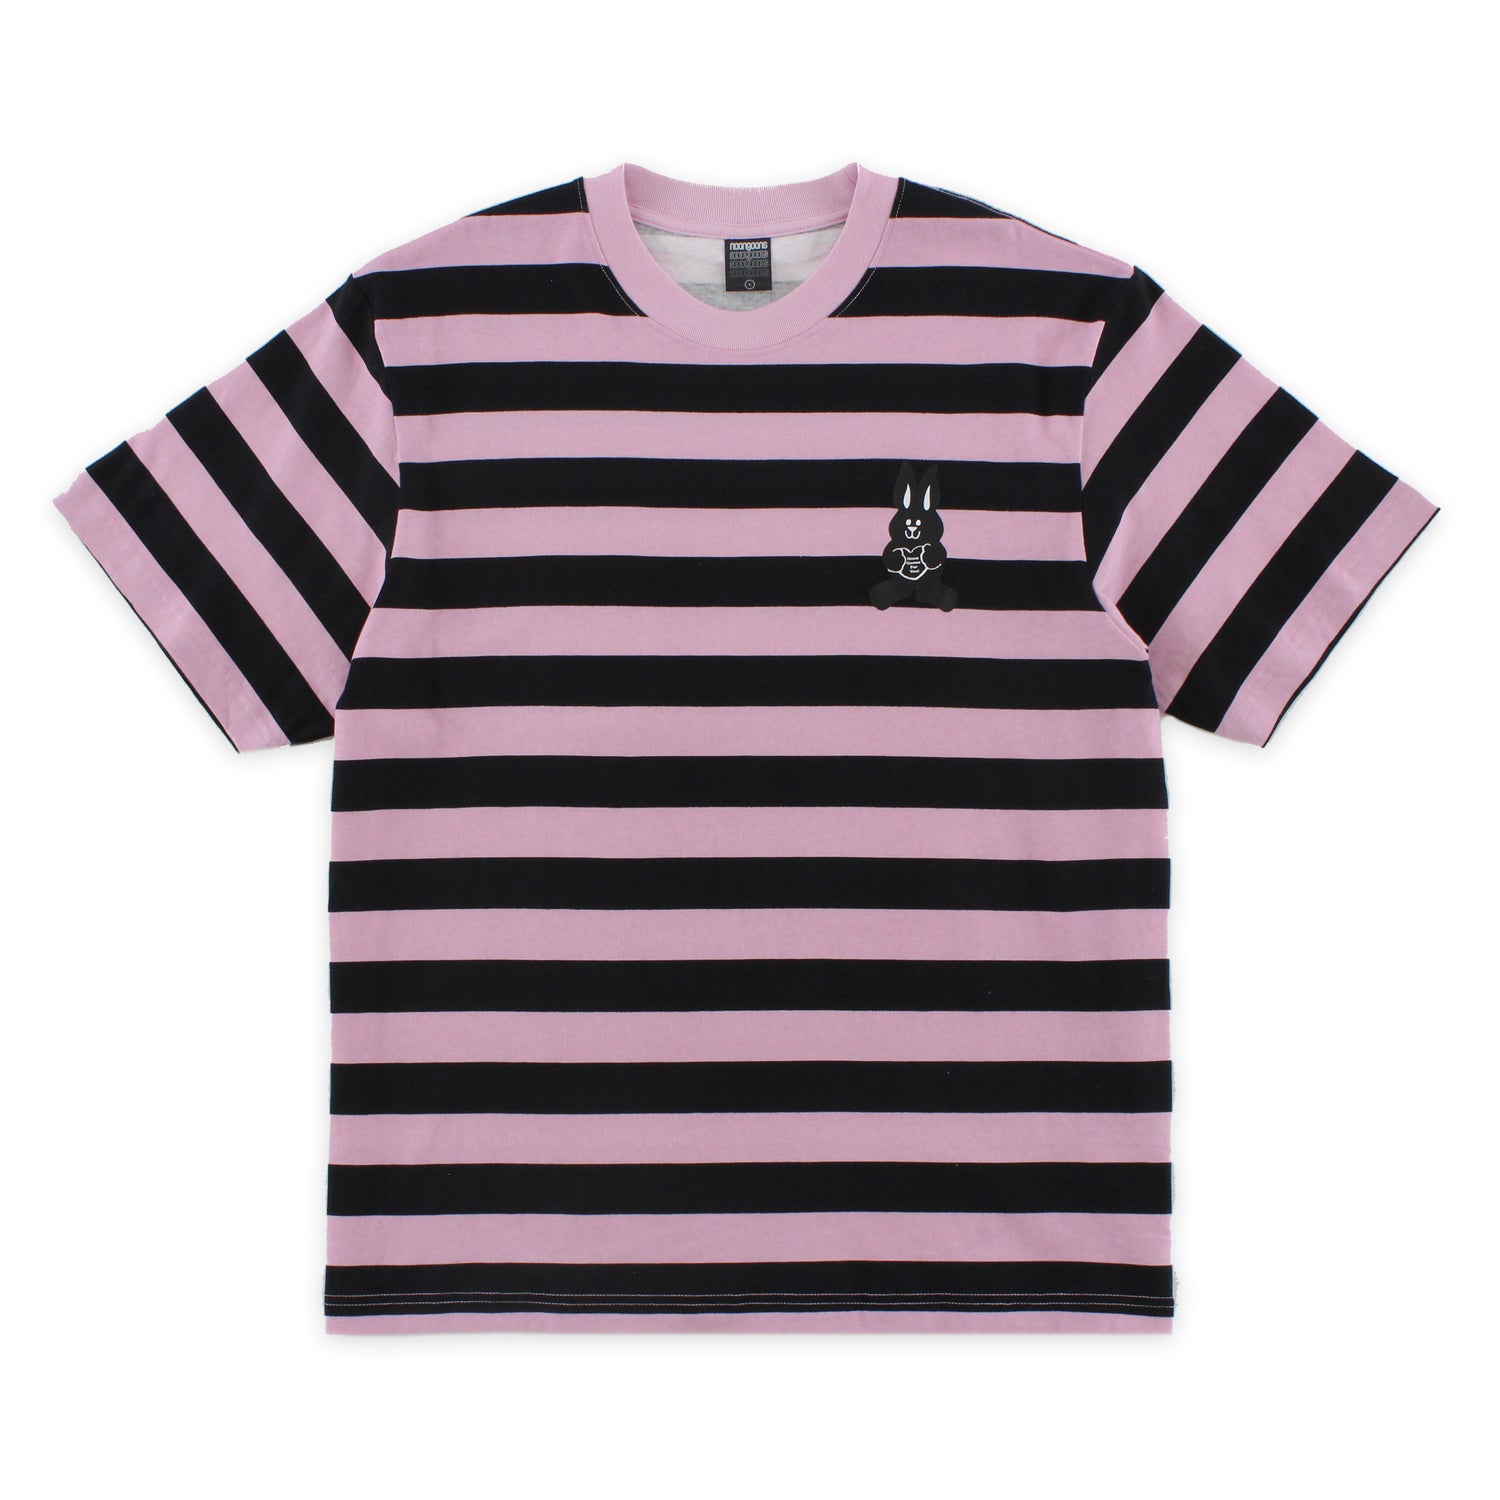 Stoned Stripe T - Black/Pink